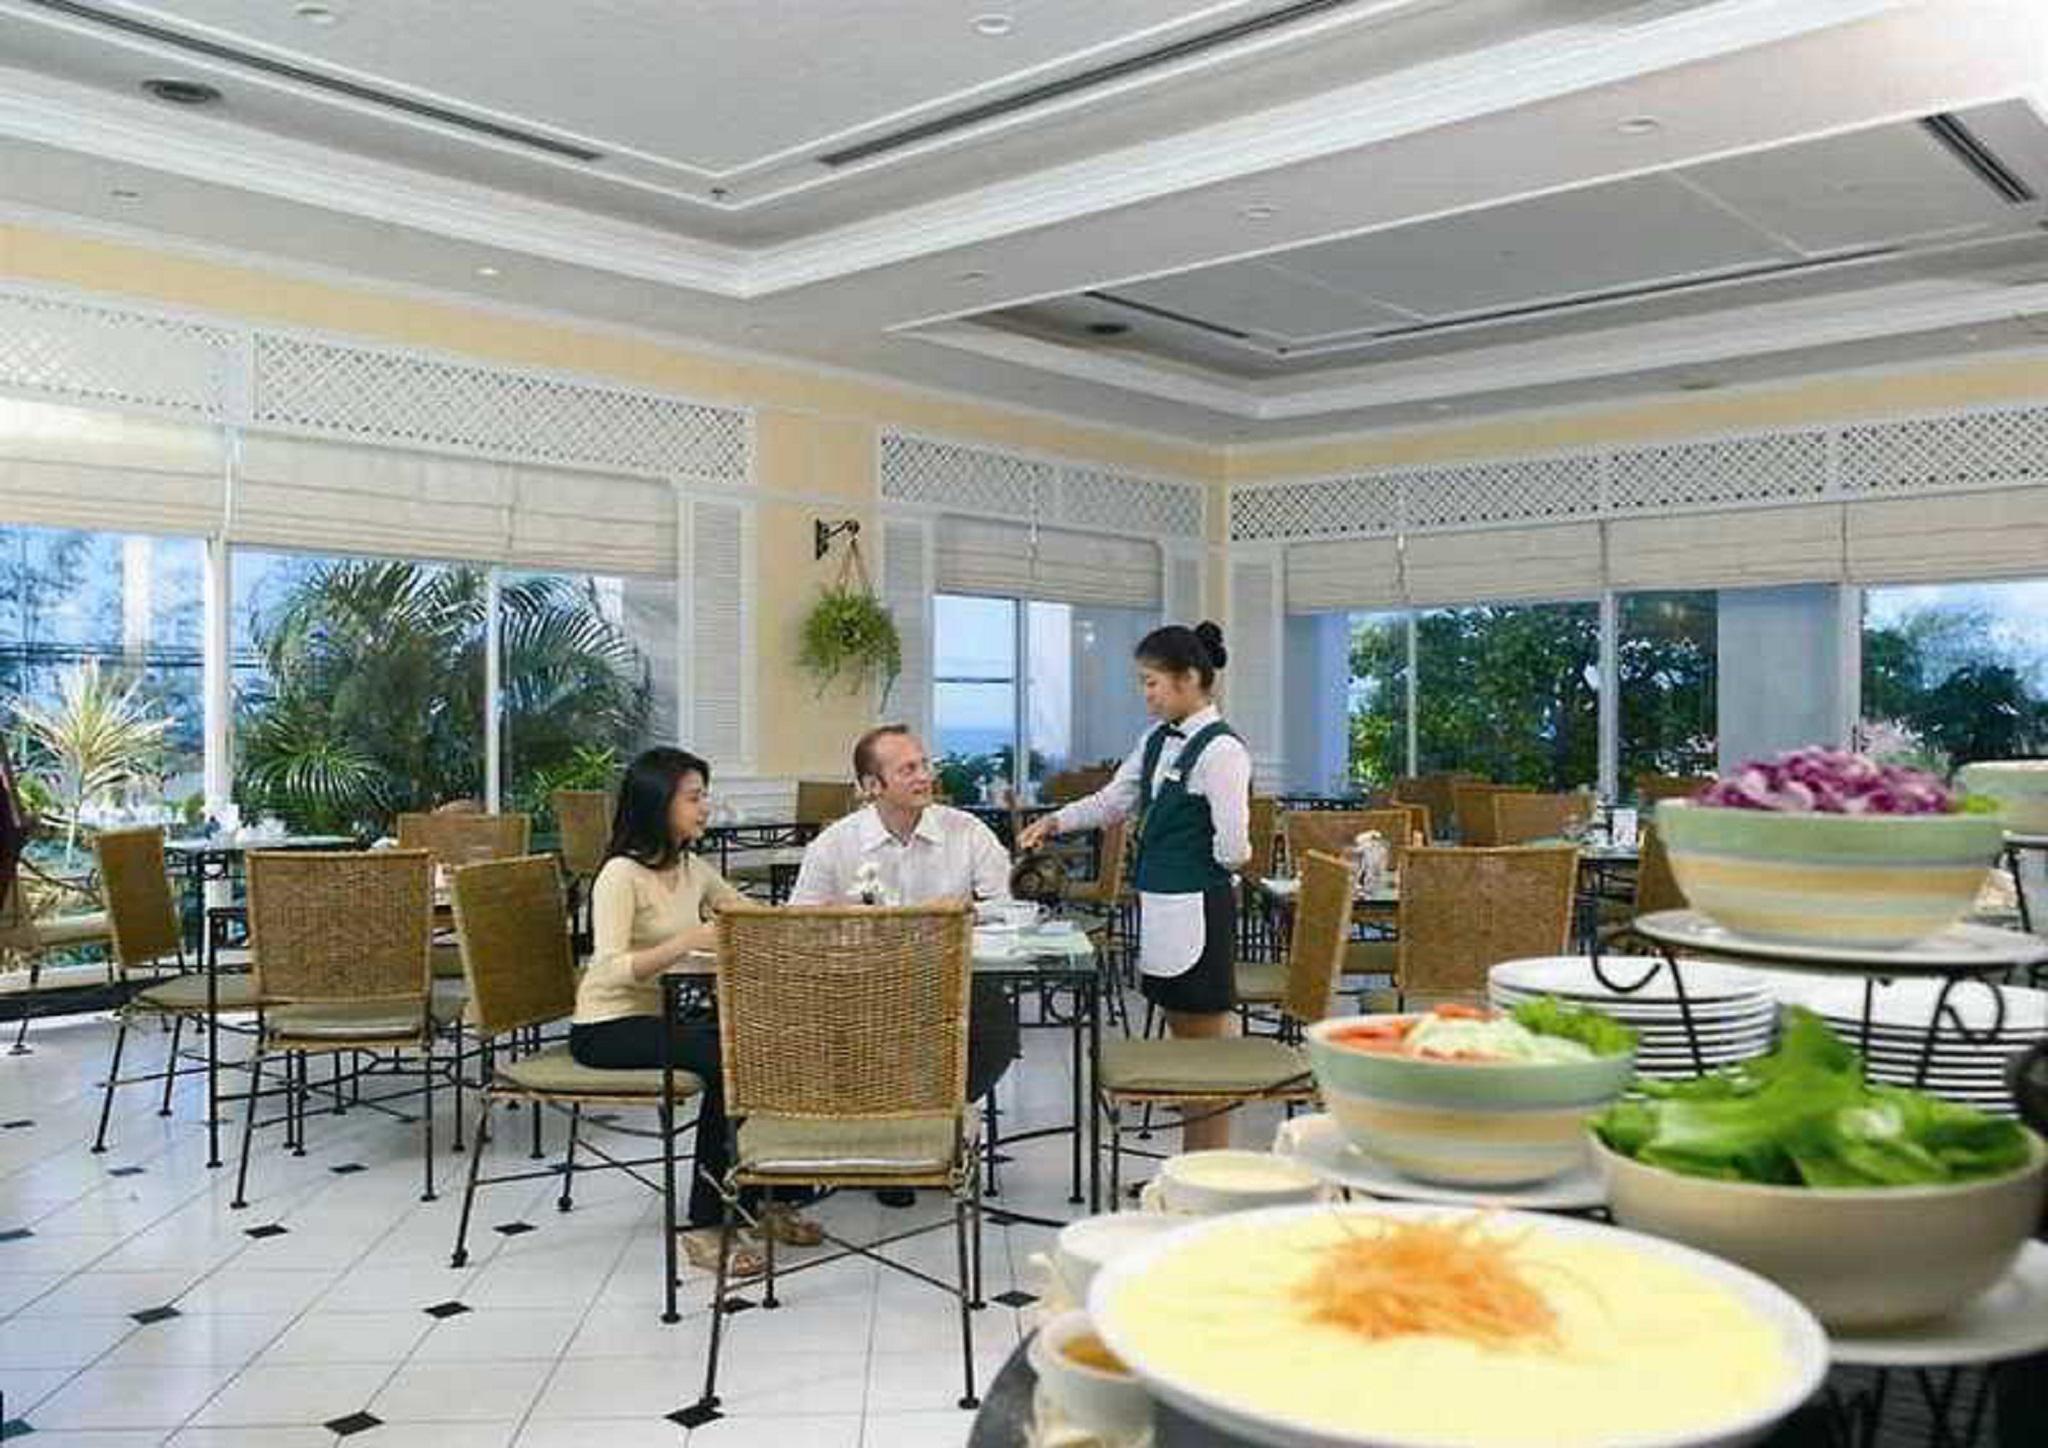 Kantary Bay Hotel And Serviced Apartment Rayong Buitenkant foto